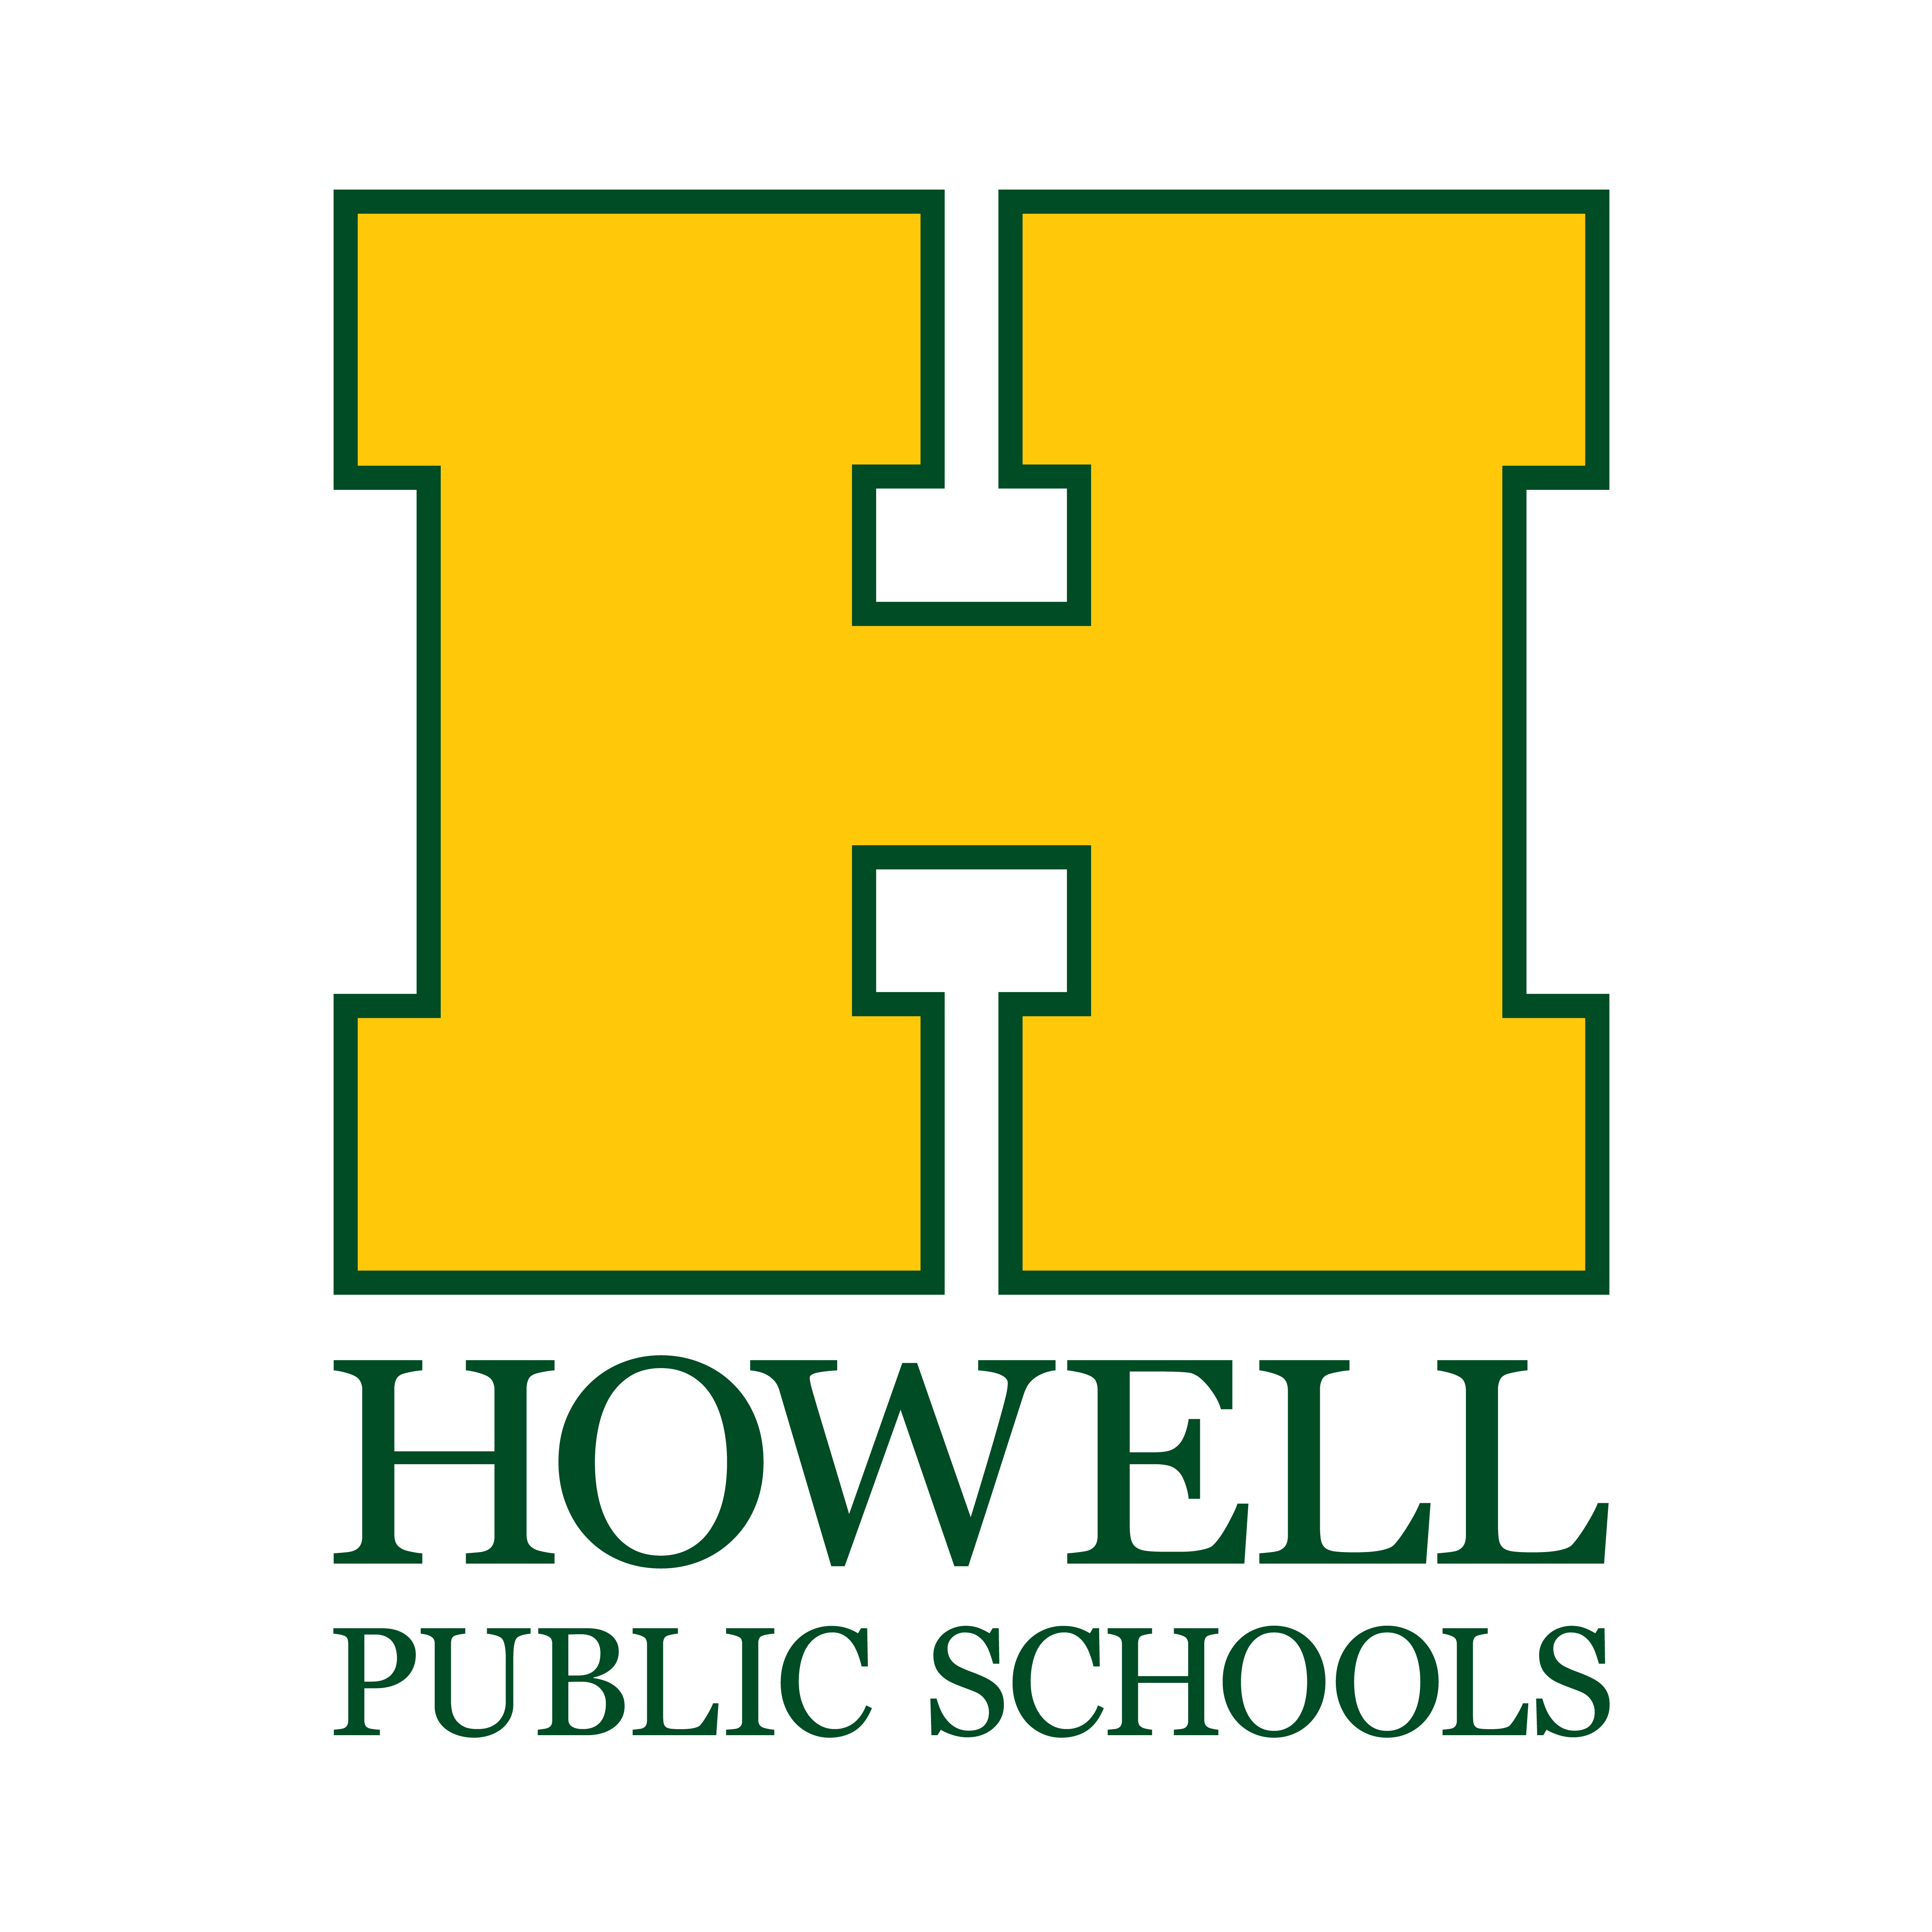 Howell Public Schools